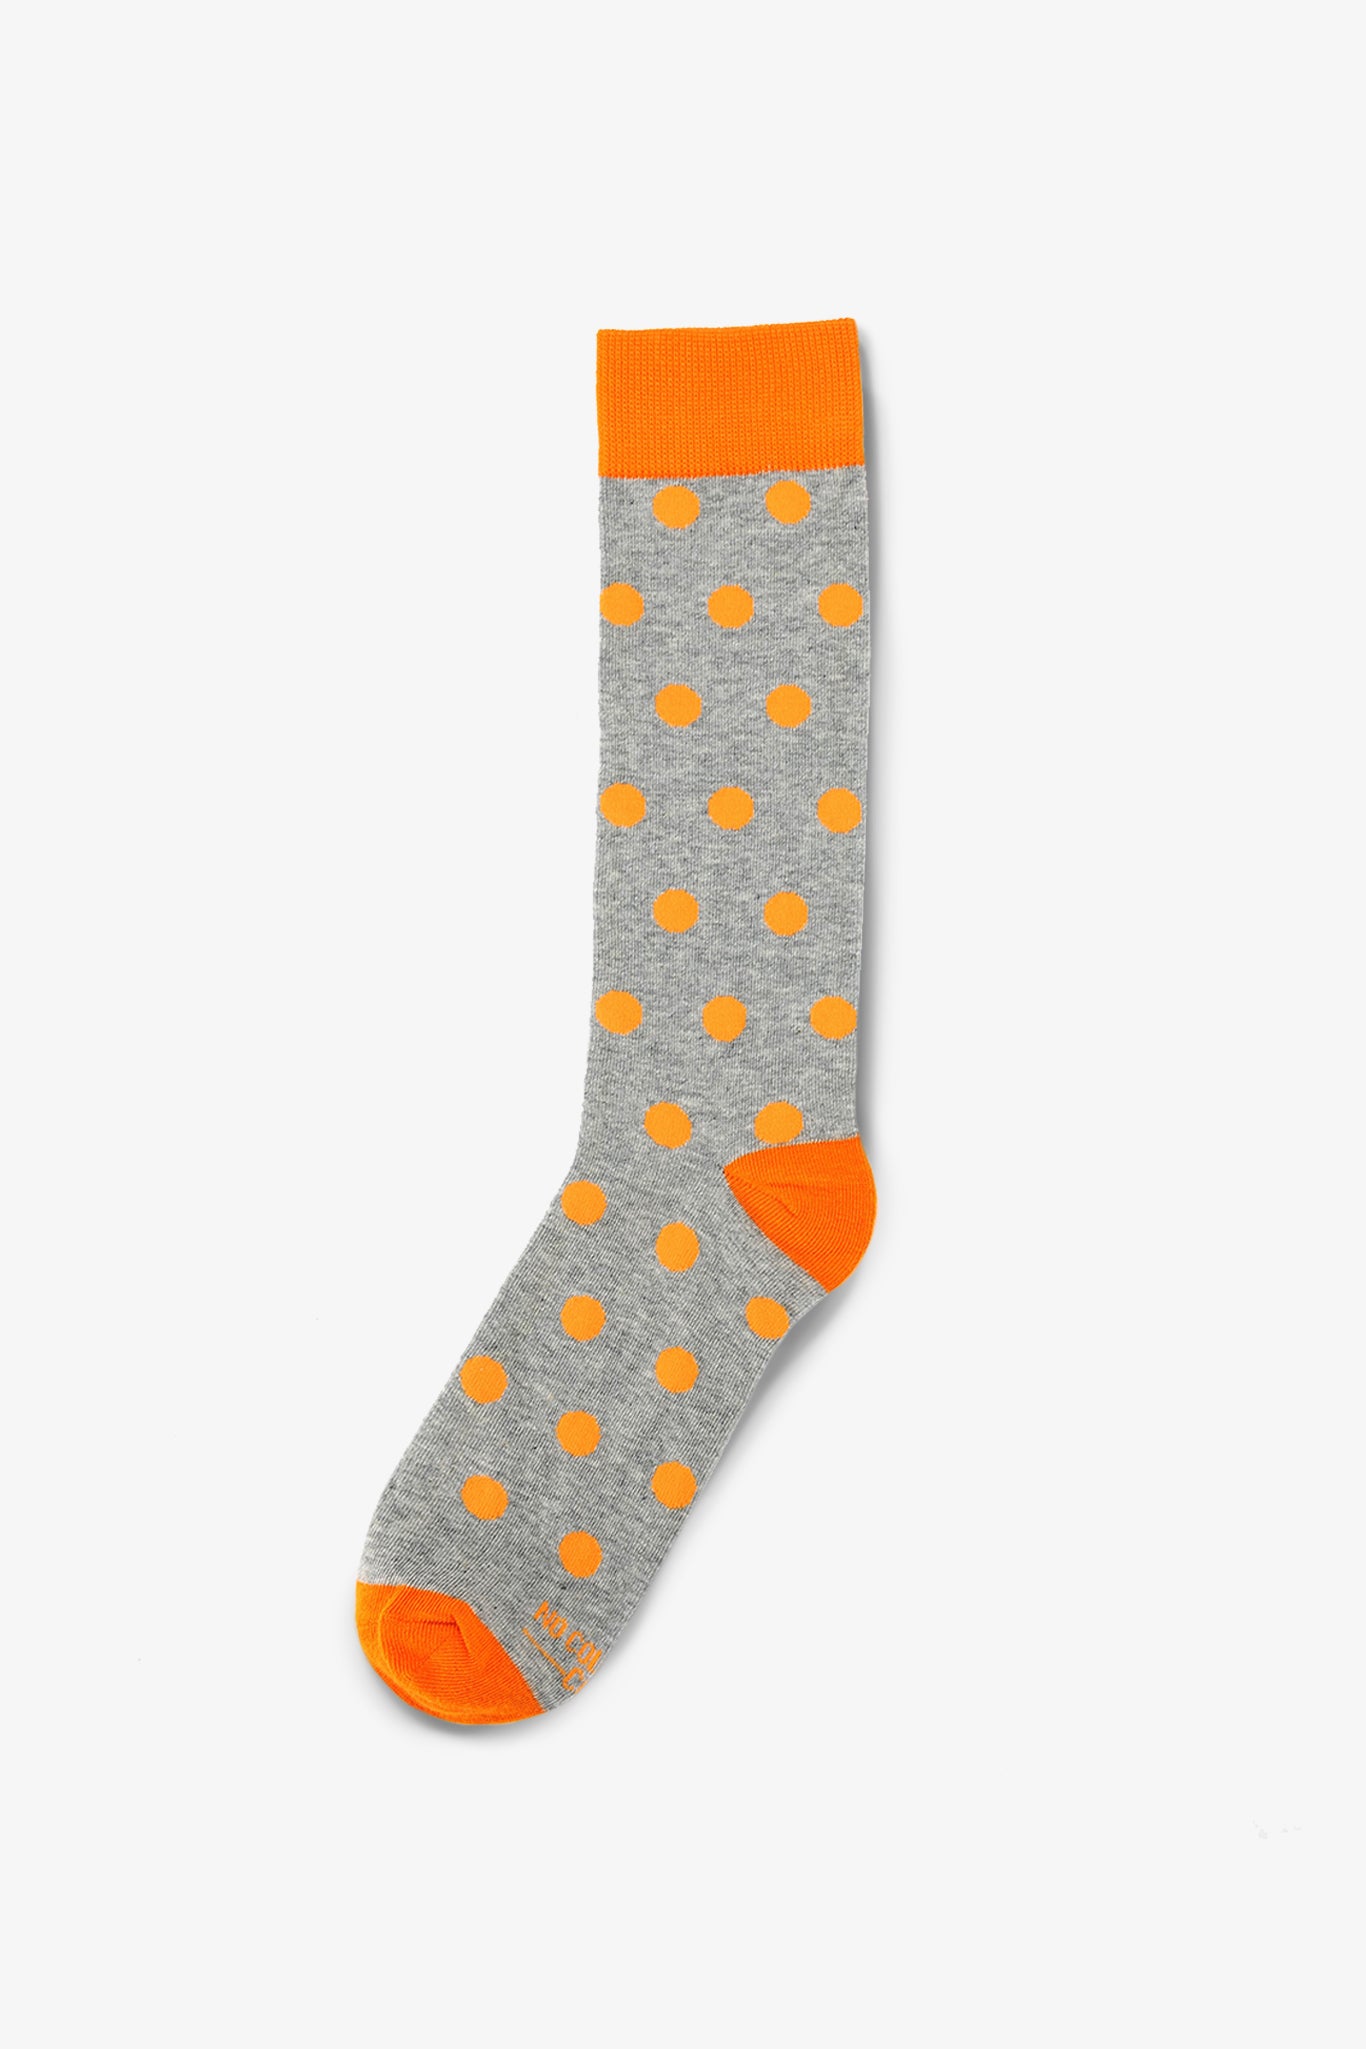 Orange and Grey Polka Dot Groomsmen Socks by No Cold Feet